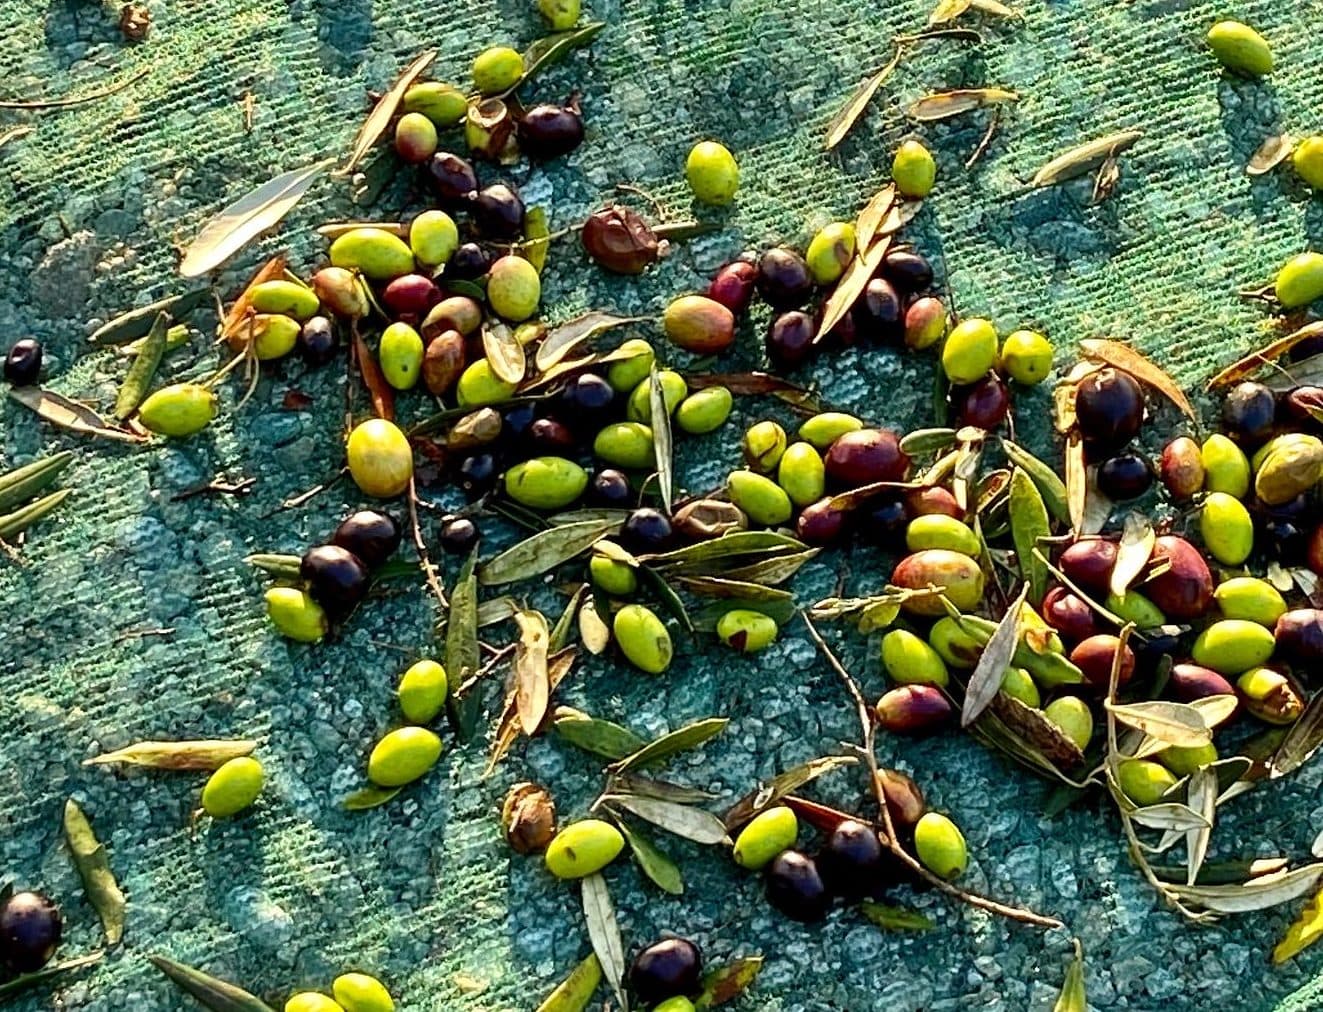 Freshly picked olives.  (Kathy Gunst/Here & Now)